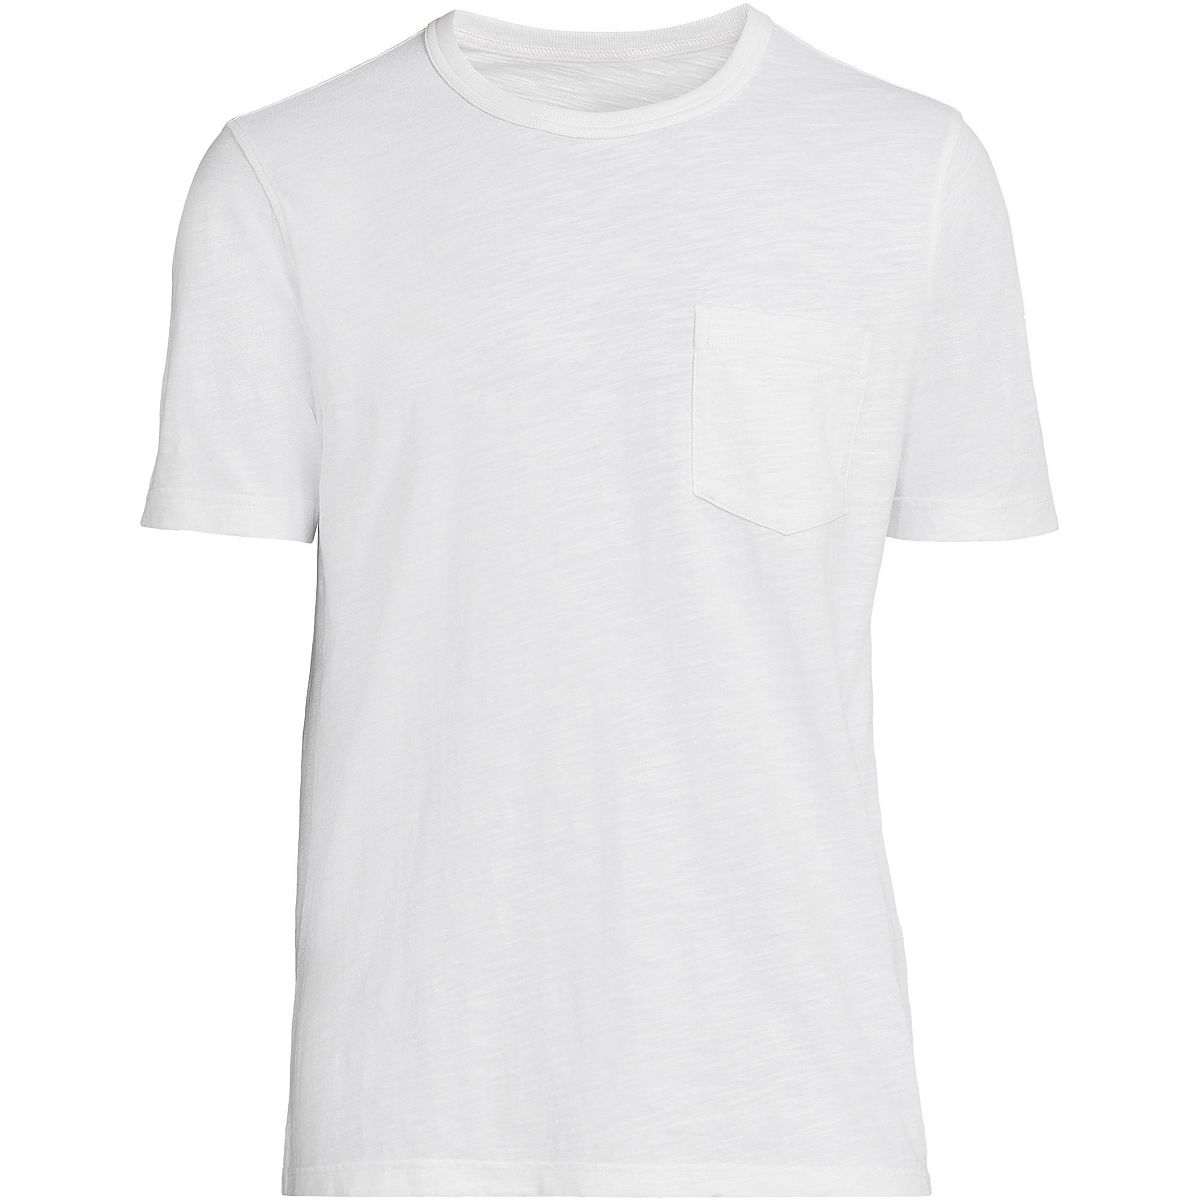 Мужская футболка с короткими рукавами и карманами Dye Slub Lands' End